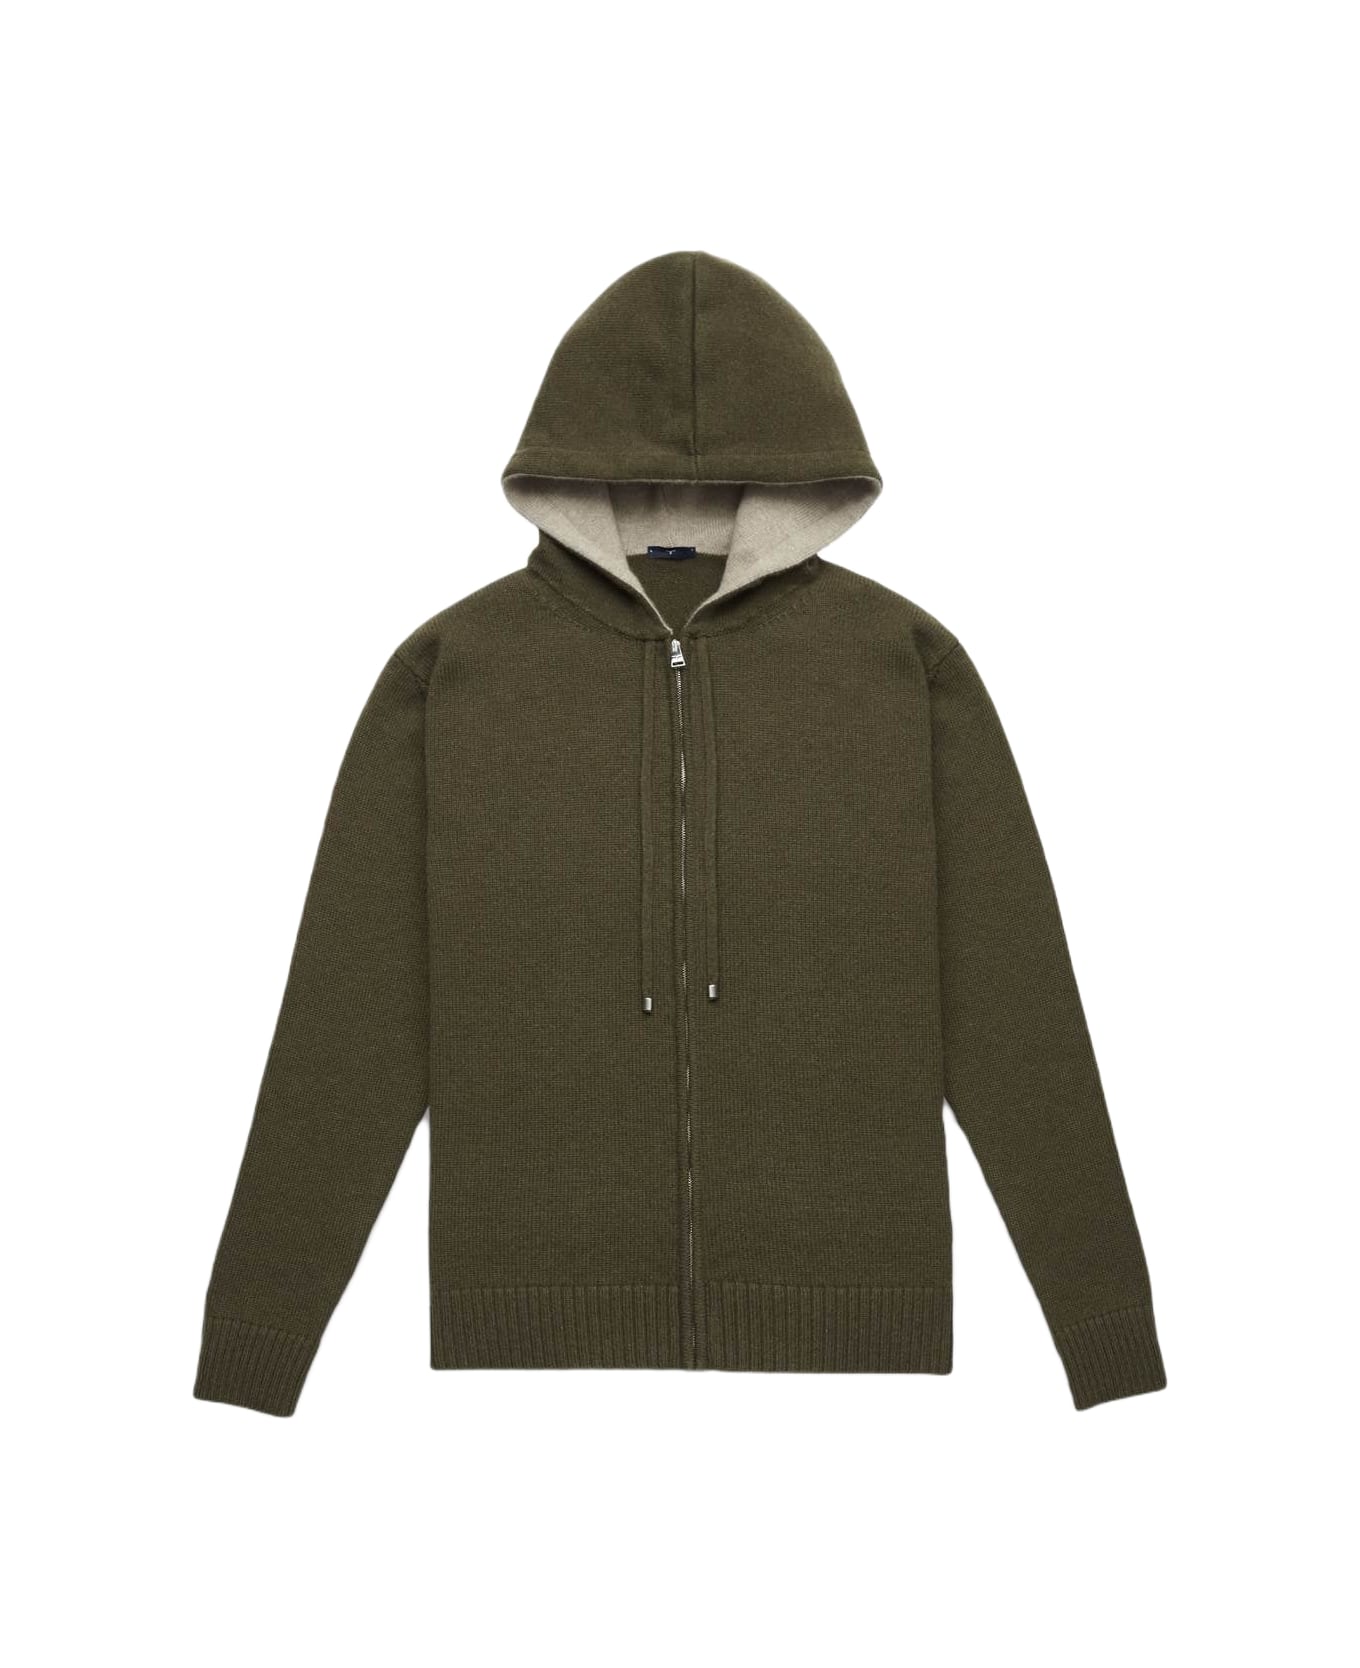 Larusmiani Zipper Hoodie 'sasso Fratino' Sweater - Green ニットウェア